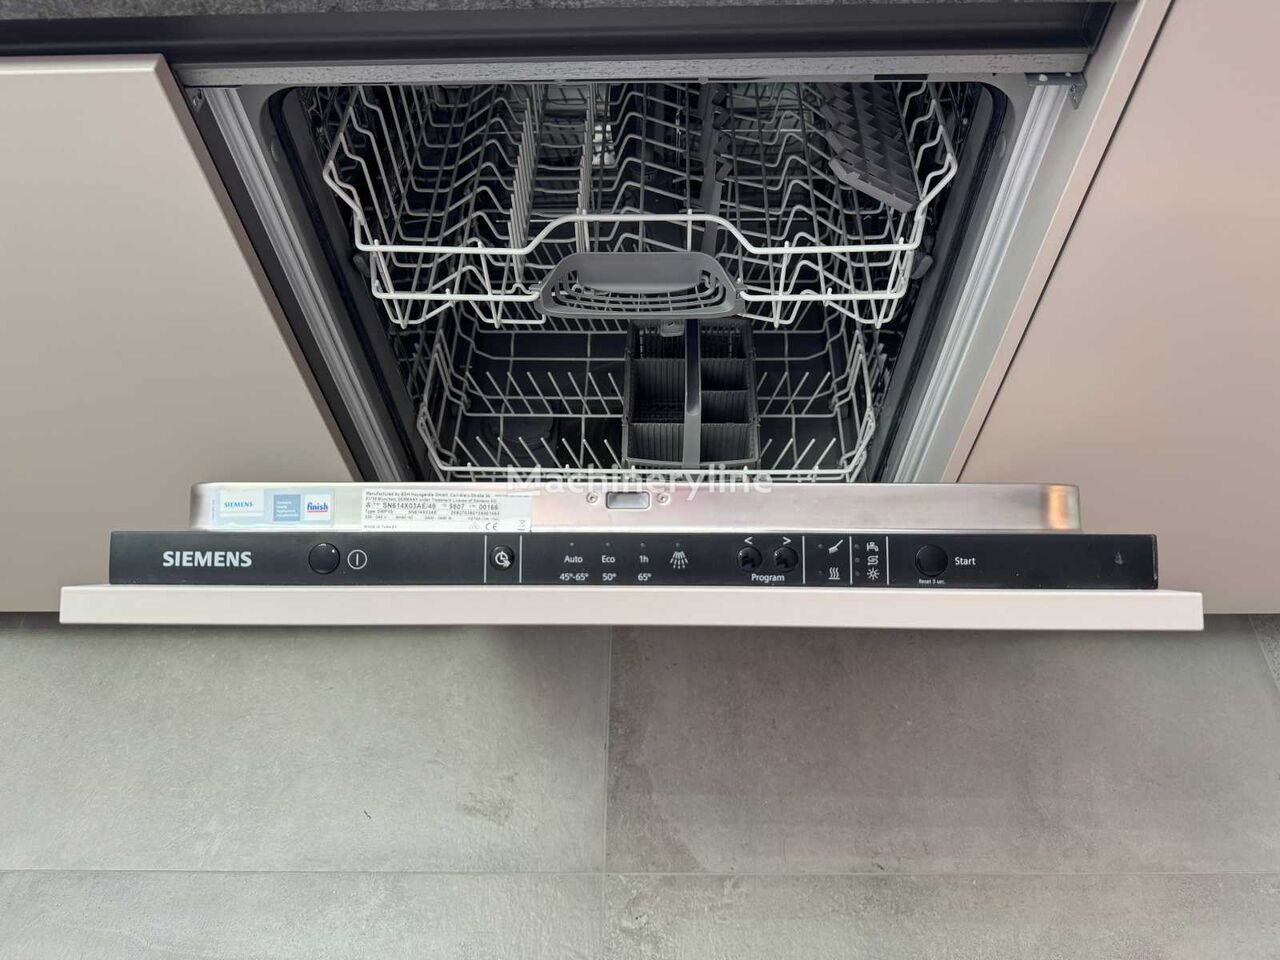 Siemens SN614X03AE dishwasher